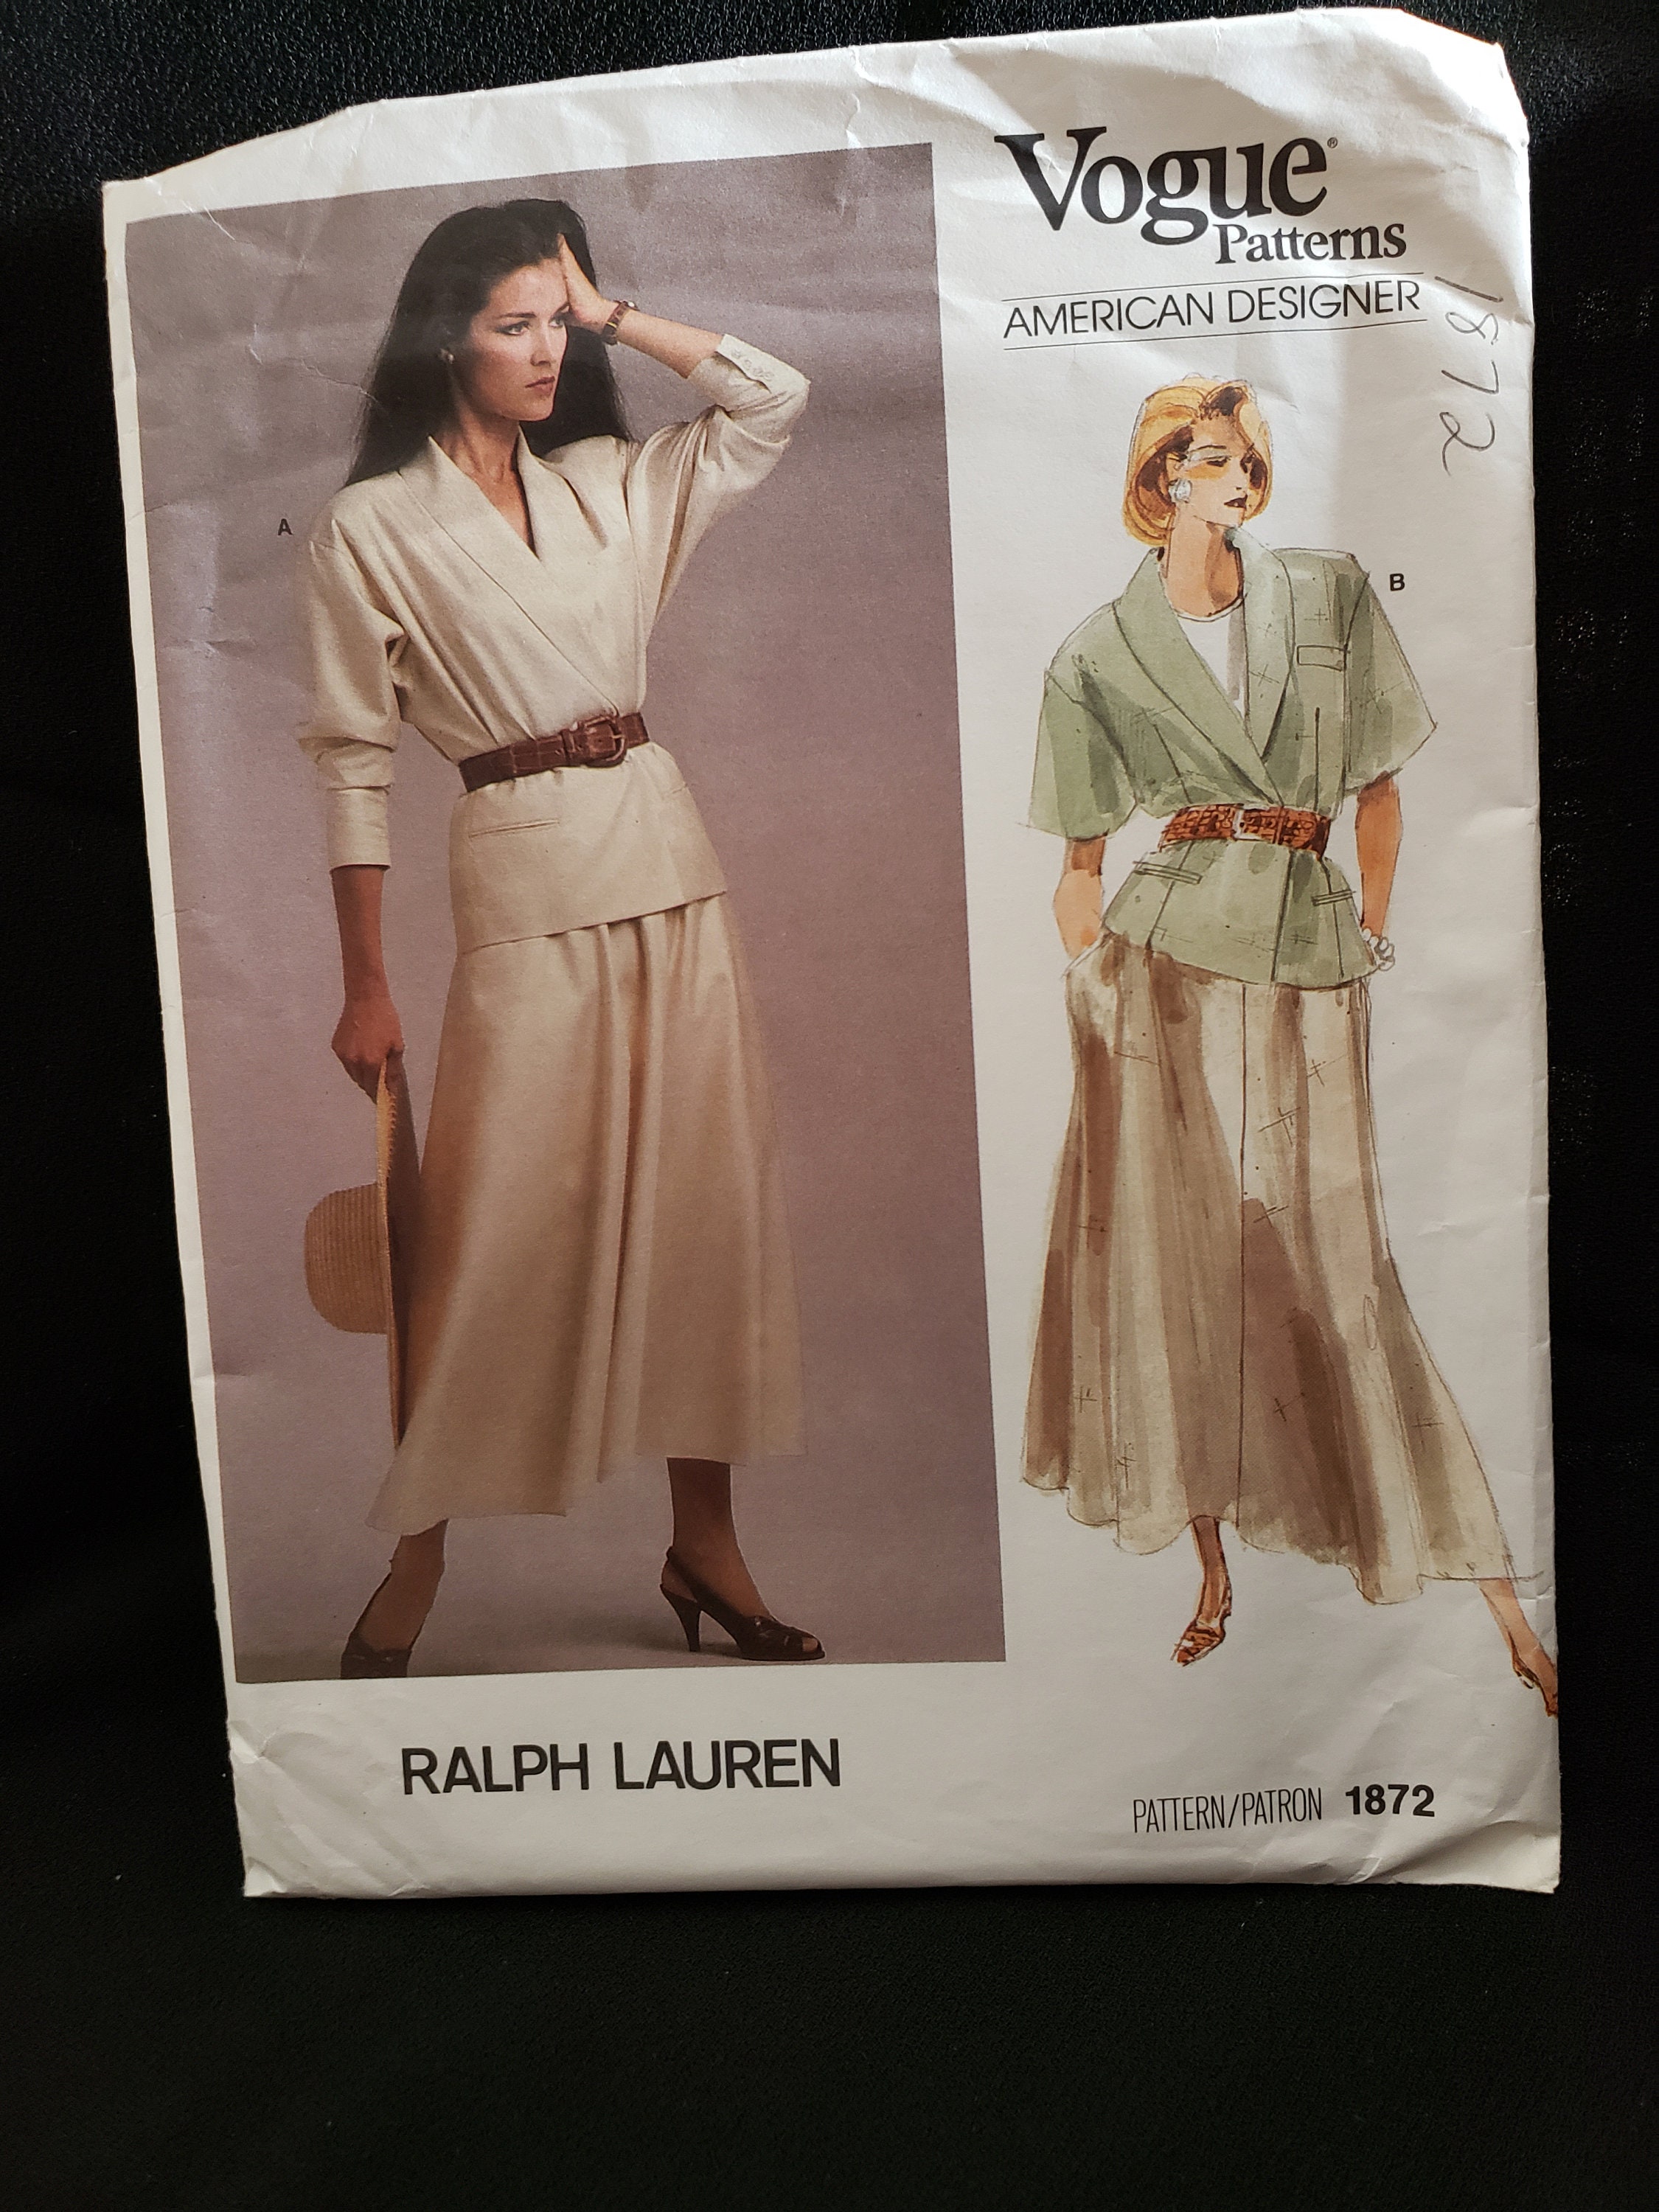 Vogue 1872 Sewing Pattern American Designer Ralph Lauren - Etsy Sweden